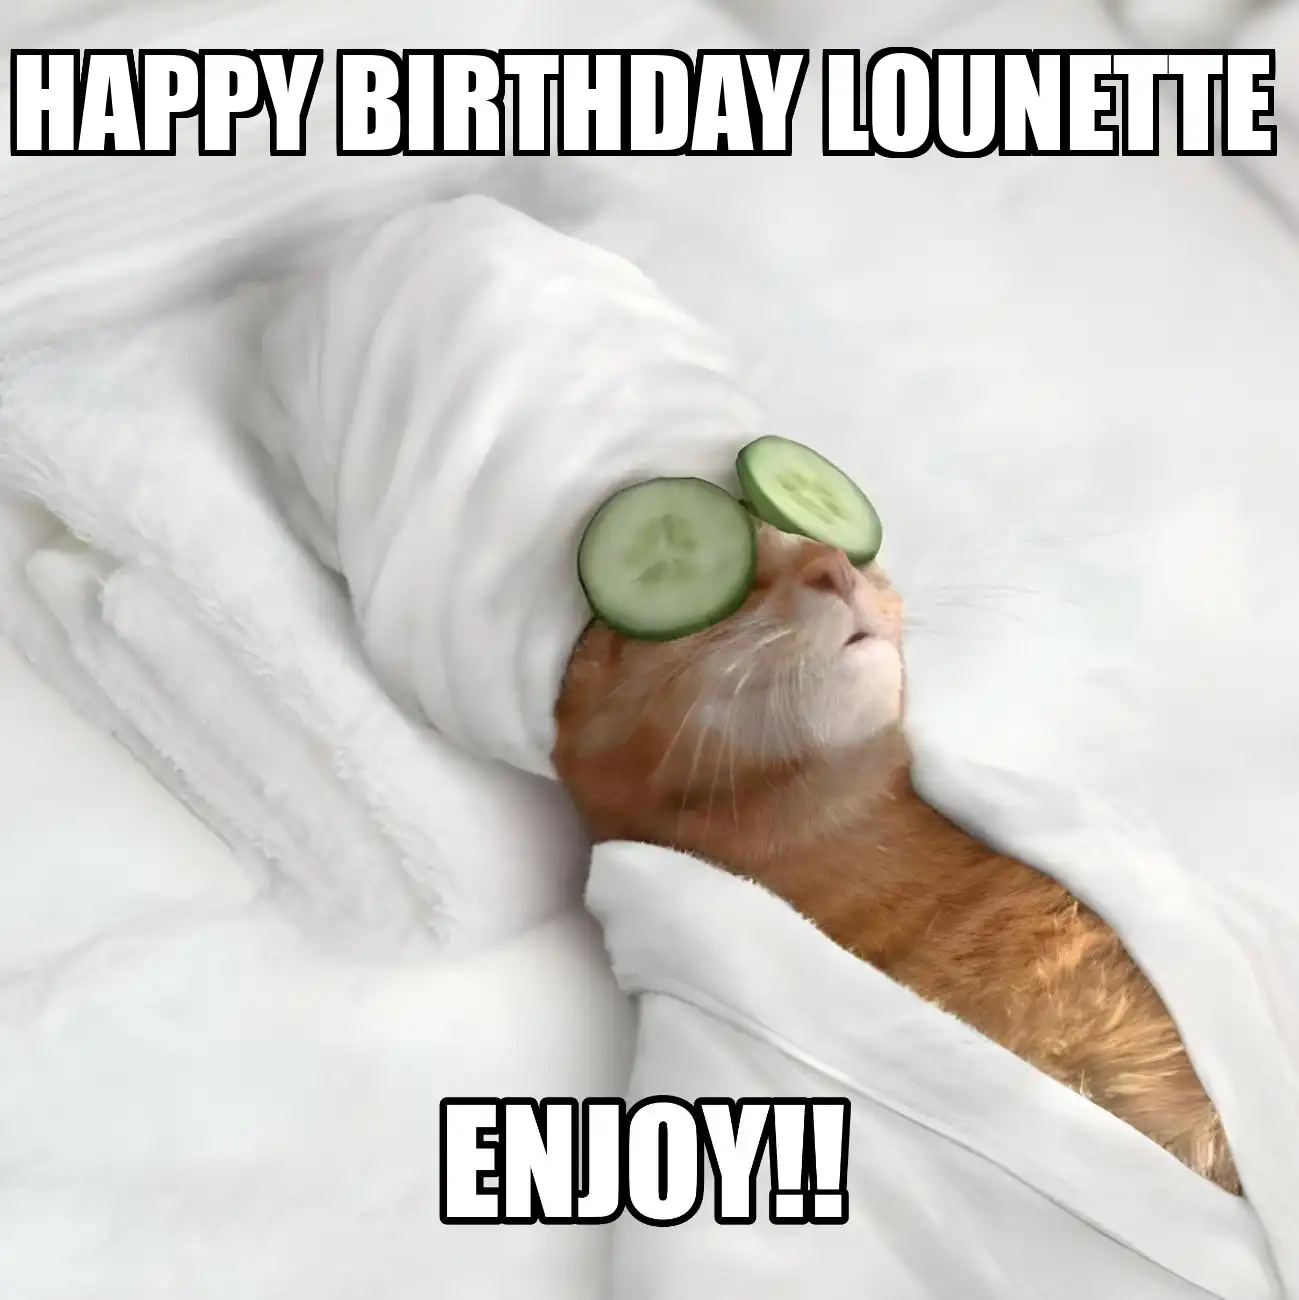 Happy Birthday Lounette Enjoy Cat Meme